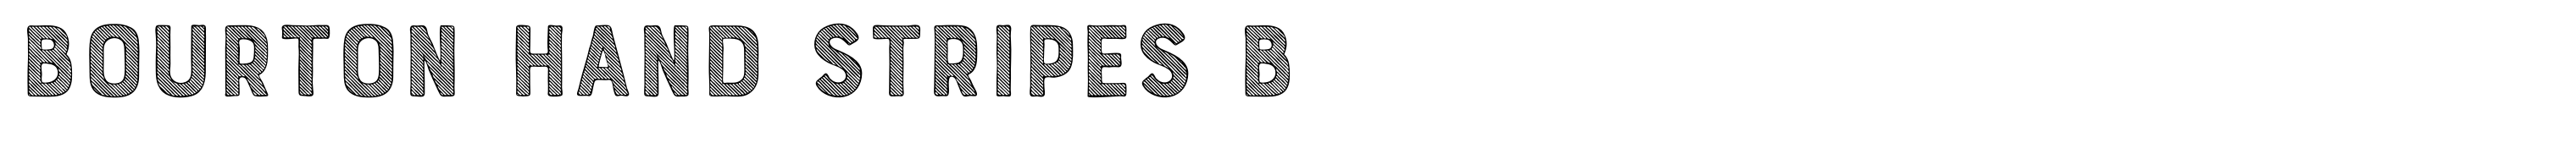 Bourton Hand Stripes B